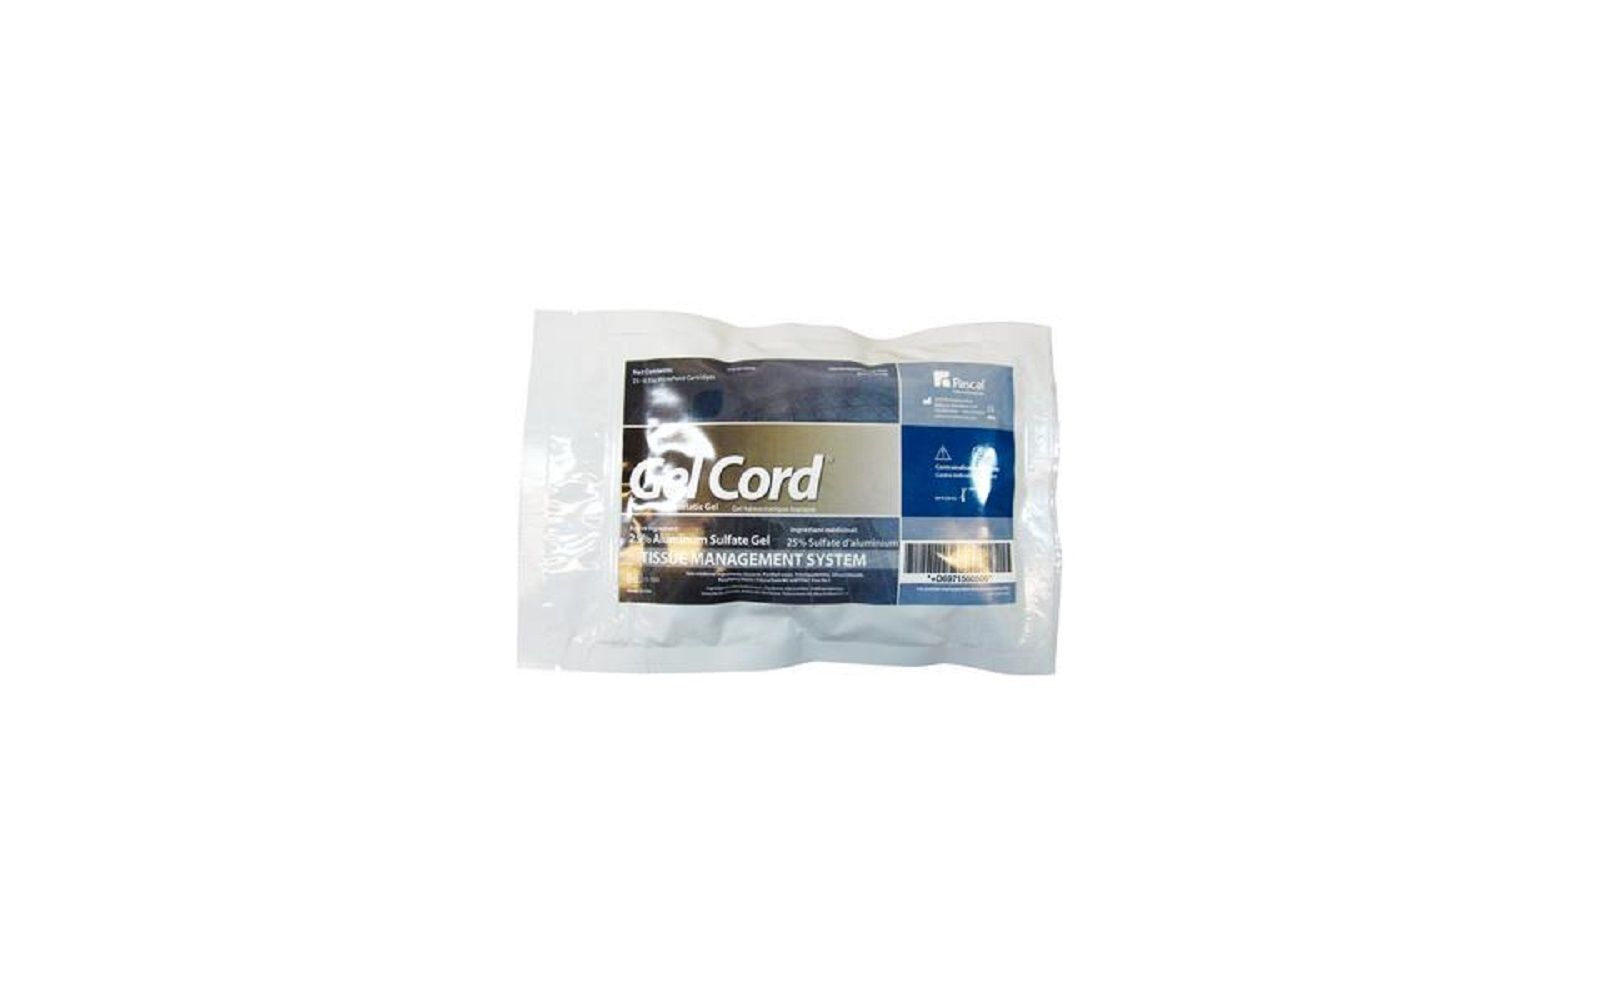 Gel cord® 25% aluminum sulfate light blue gel – refill kit